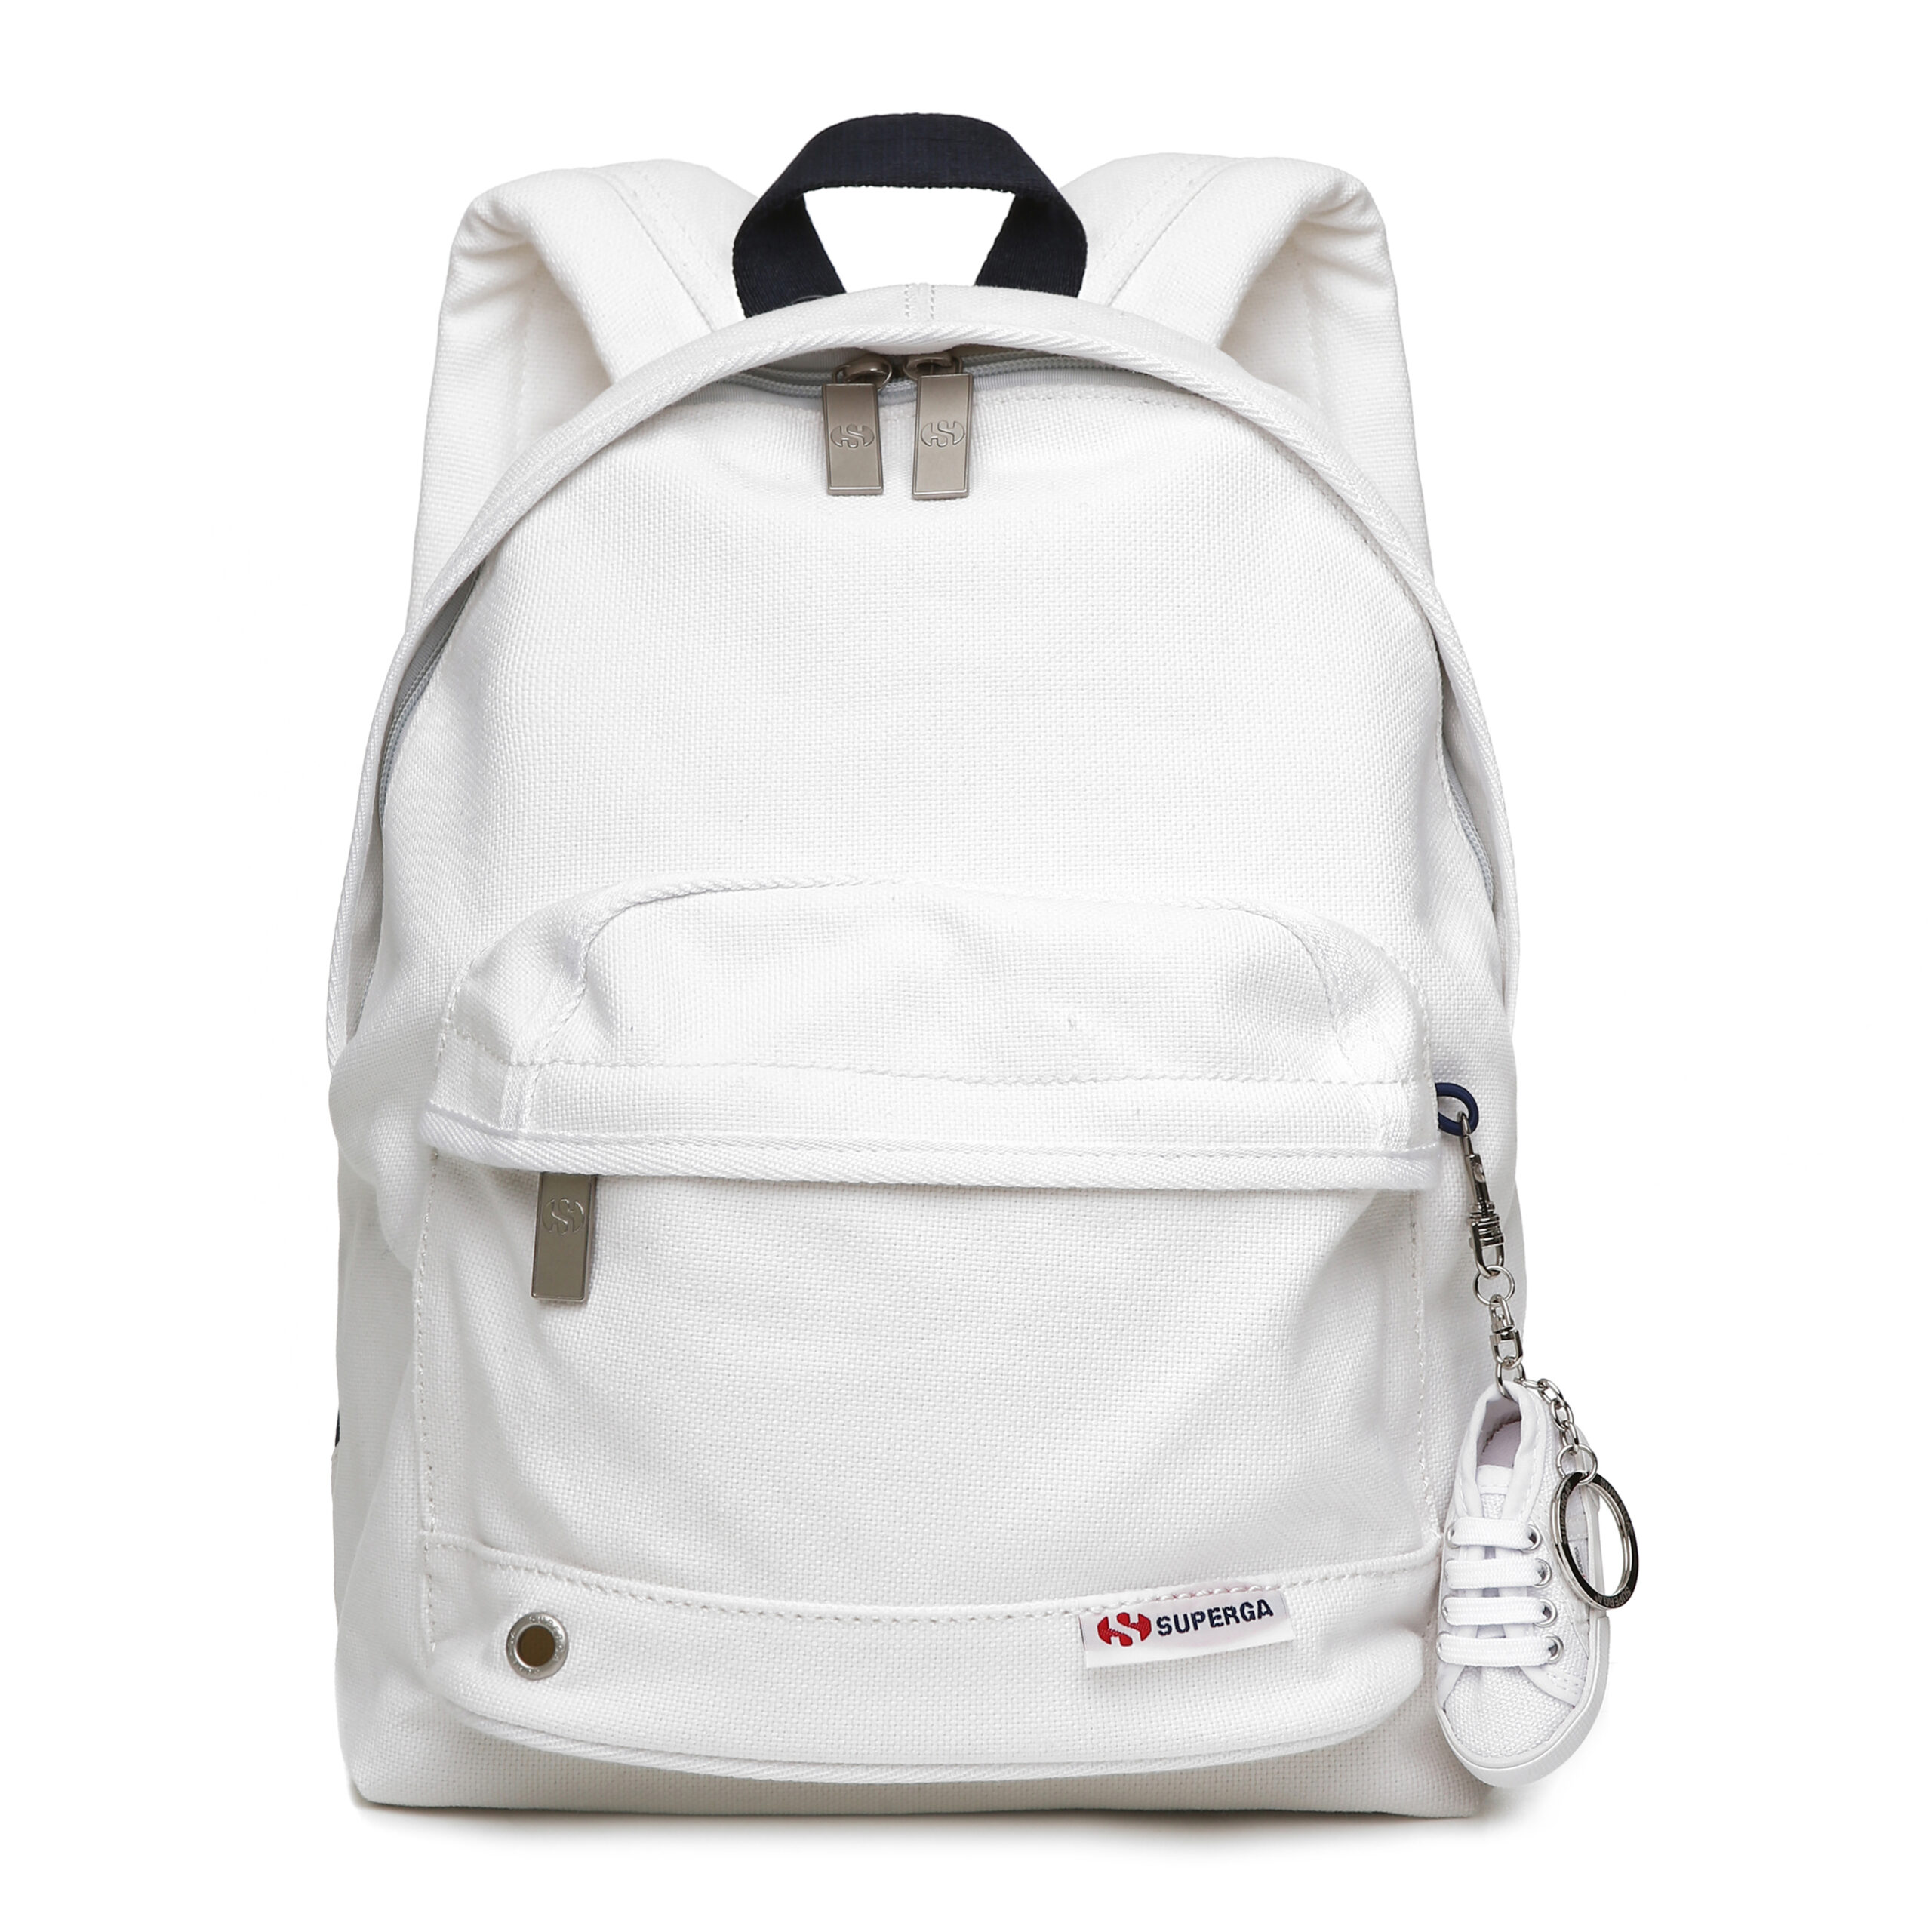 Backpack Small 2750 Bianco 100 Cotone Dim 25x36x12 Cm Superga 6bss0102100 8033905128977